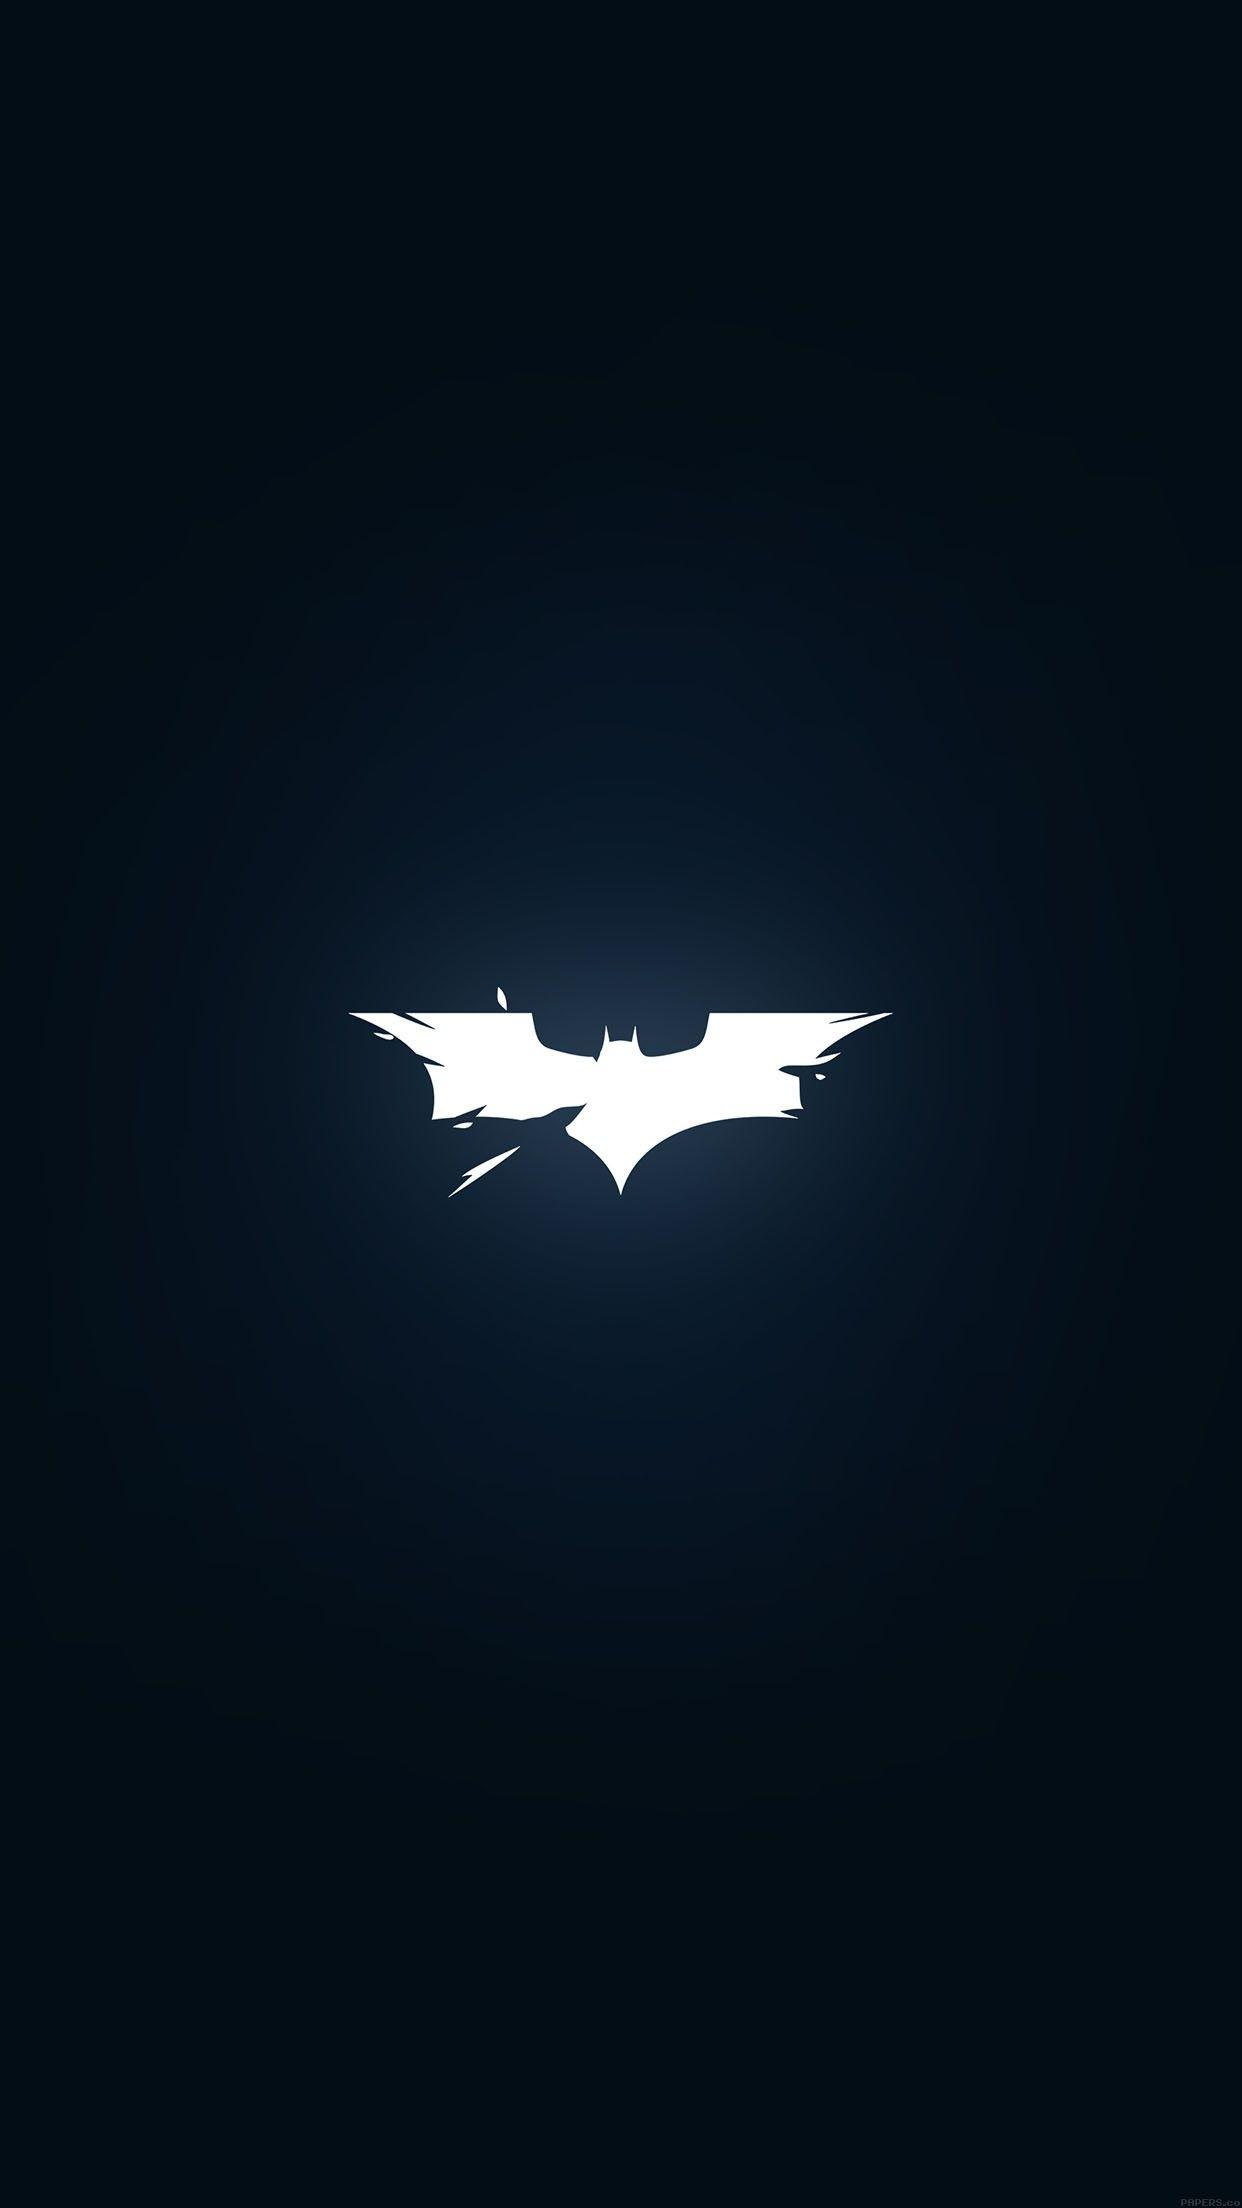 wallpaper batman logo dark shattered iPhone 6 Plus Wallpaper